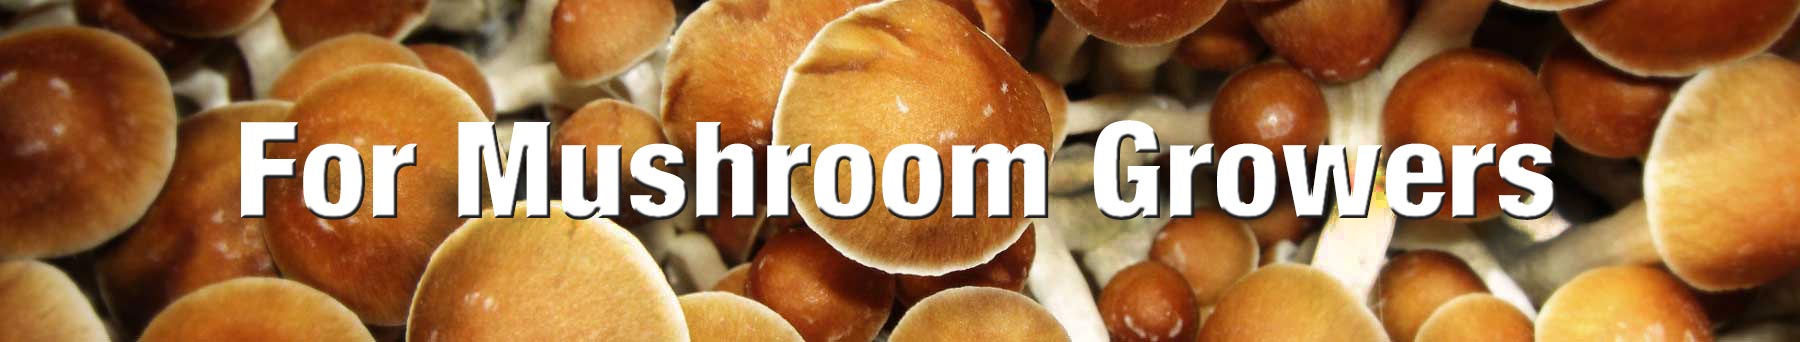 Mushroom kits and Mycology Supplies